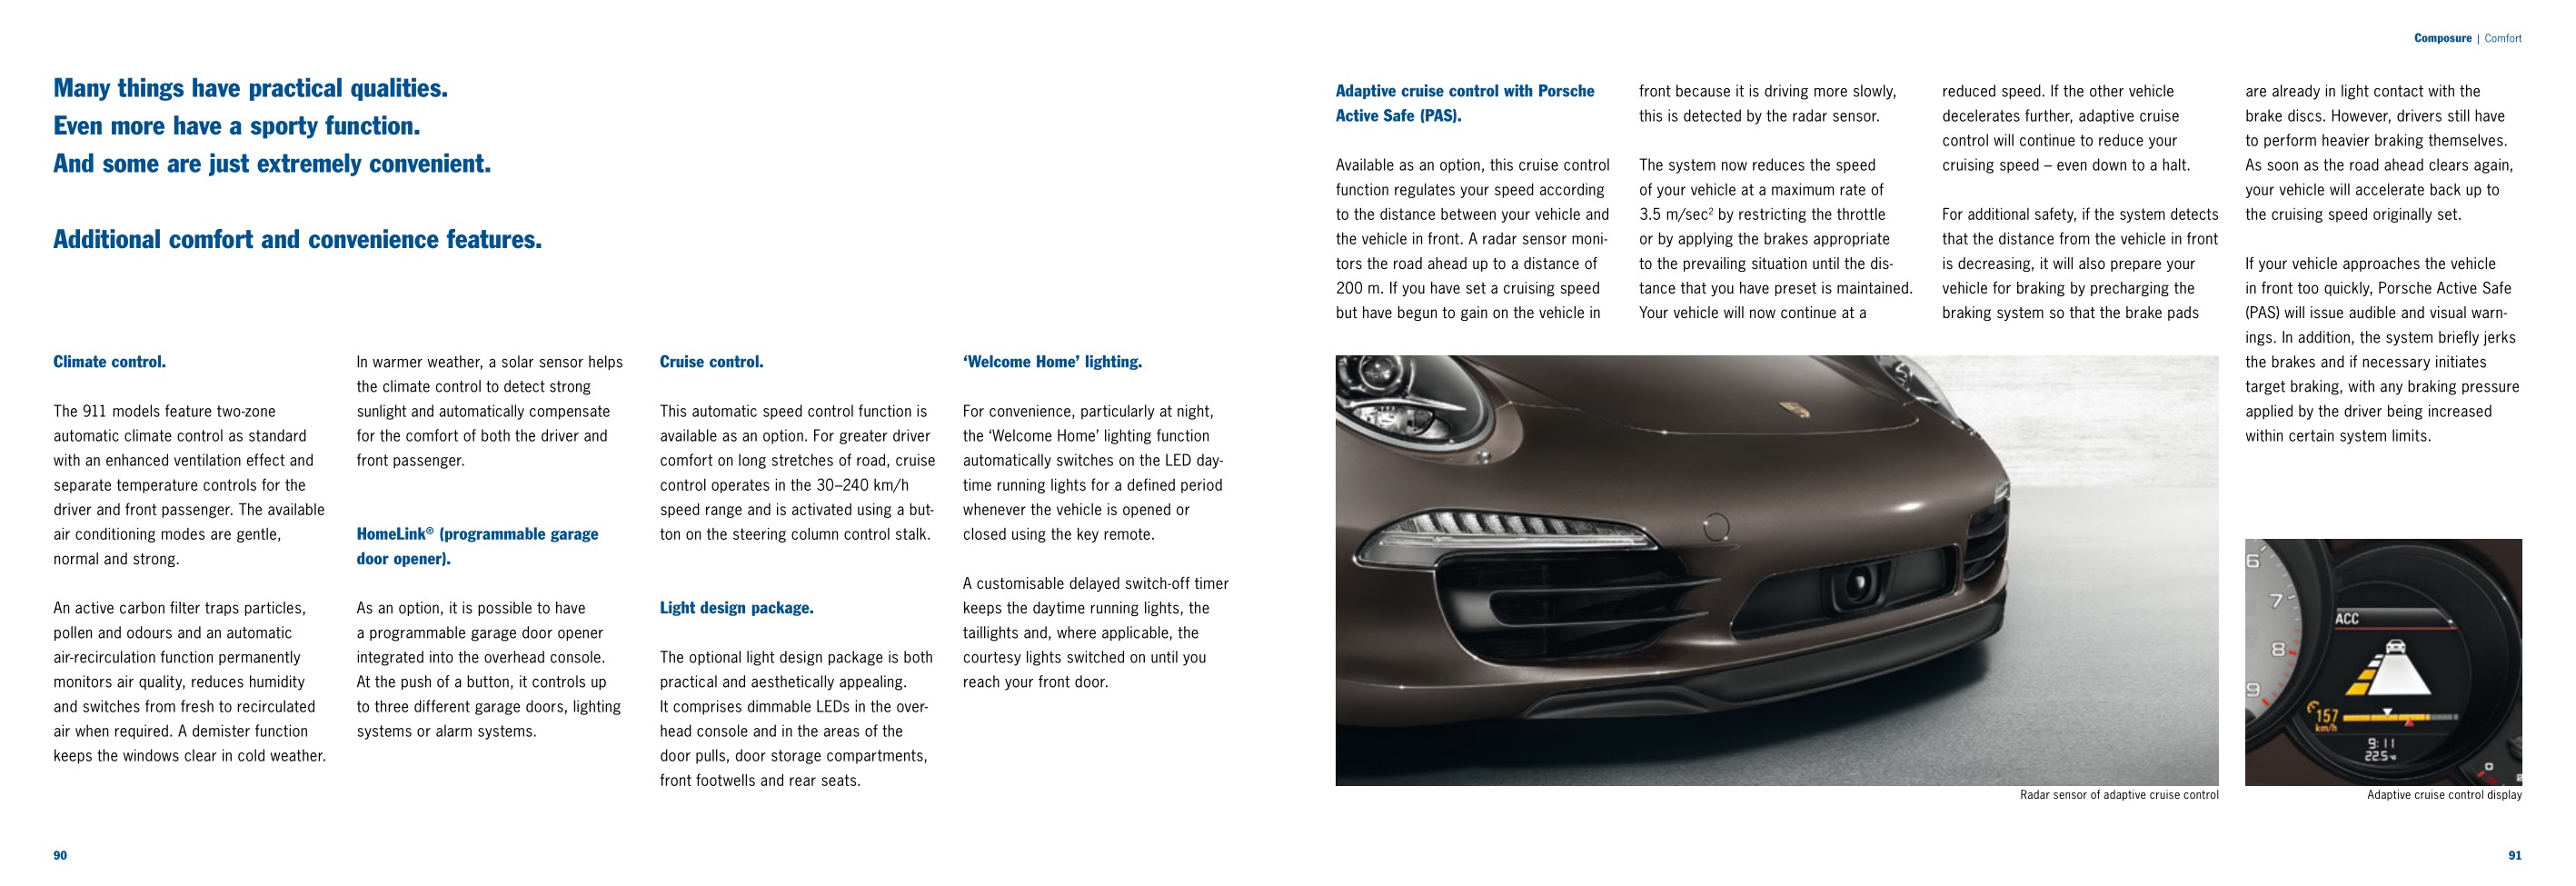 2015 Porsche 911 Brochure Page 24